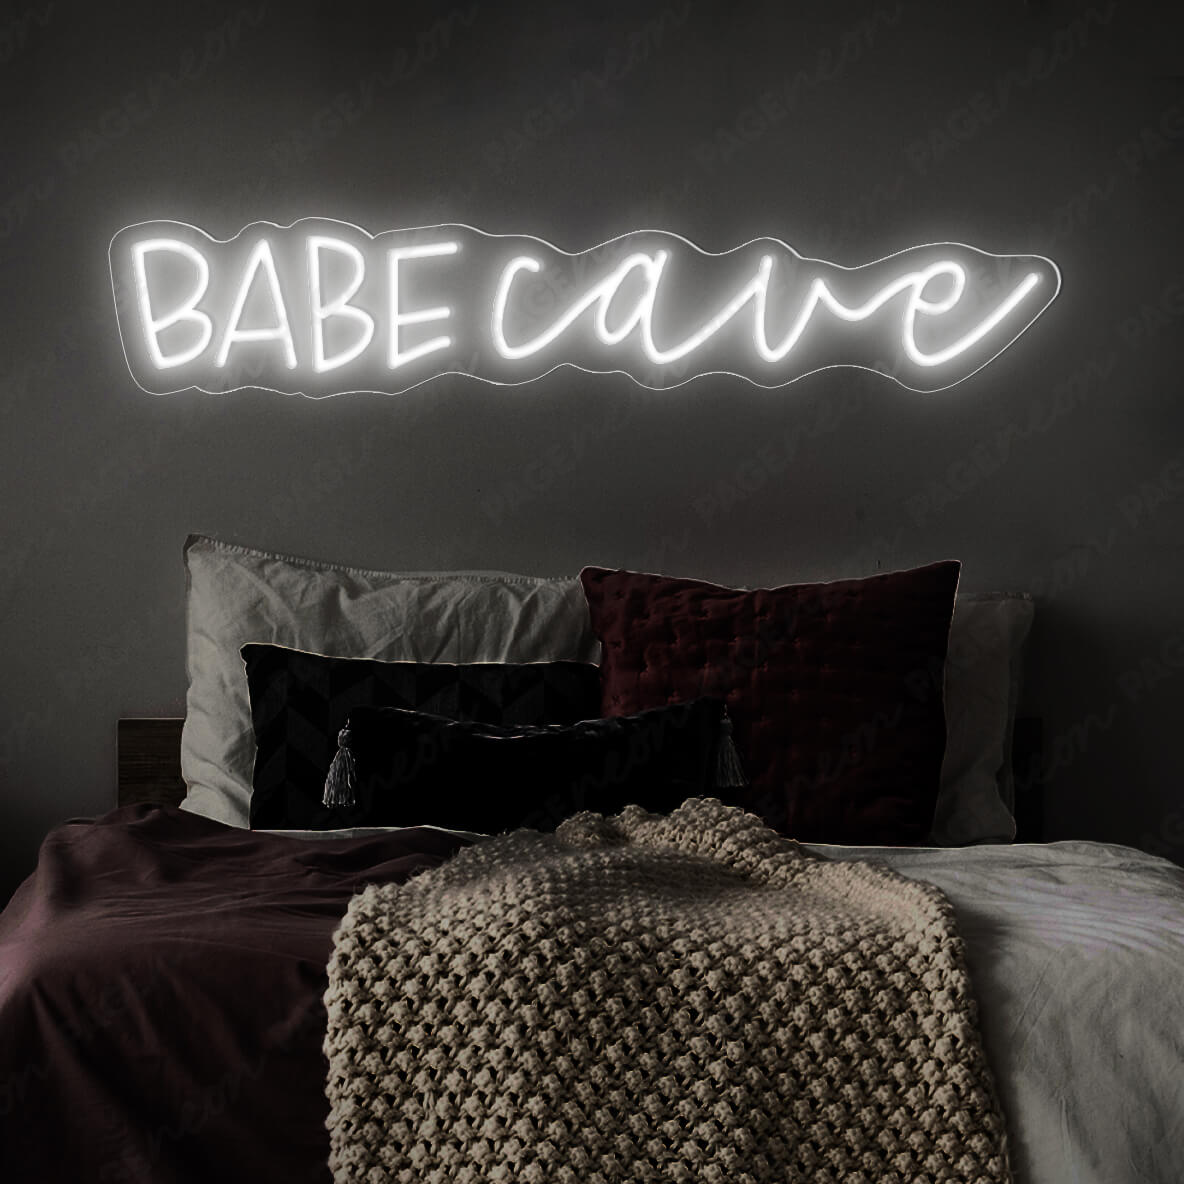 Babe Cave Neon Sign Led Light White